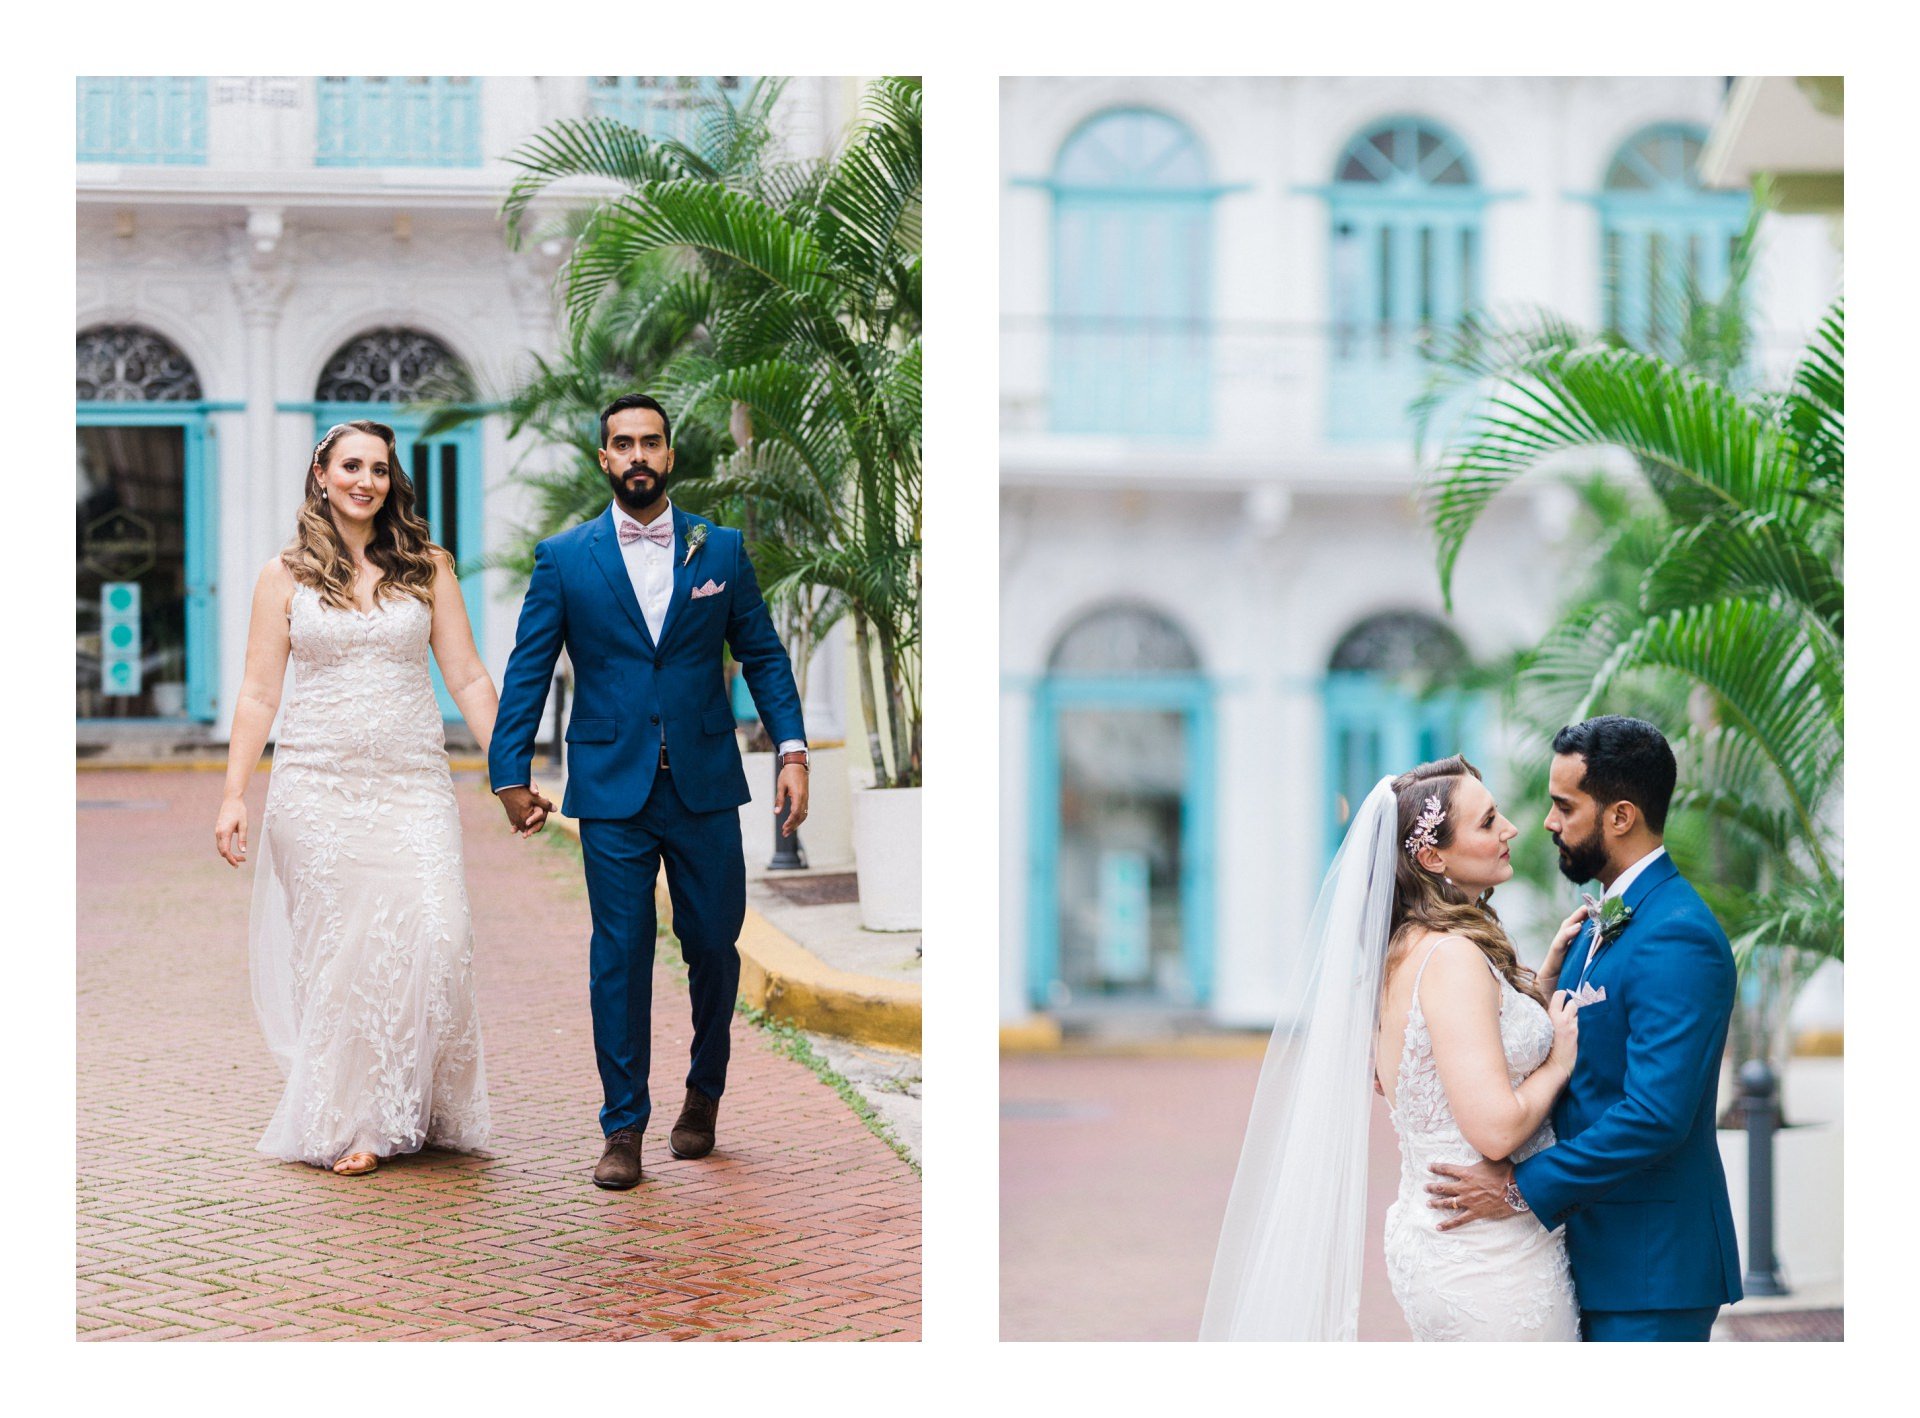 Destination Wedding Photographer in Panama City Panama 02 13.jpg